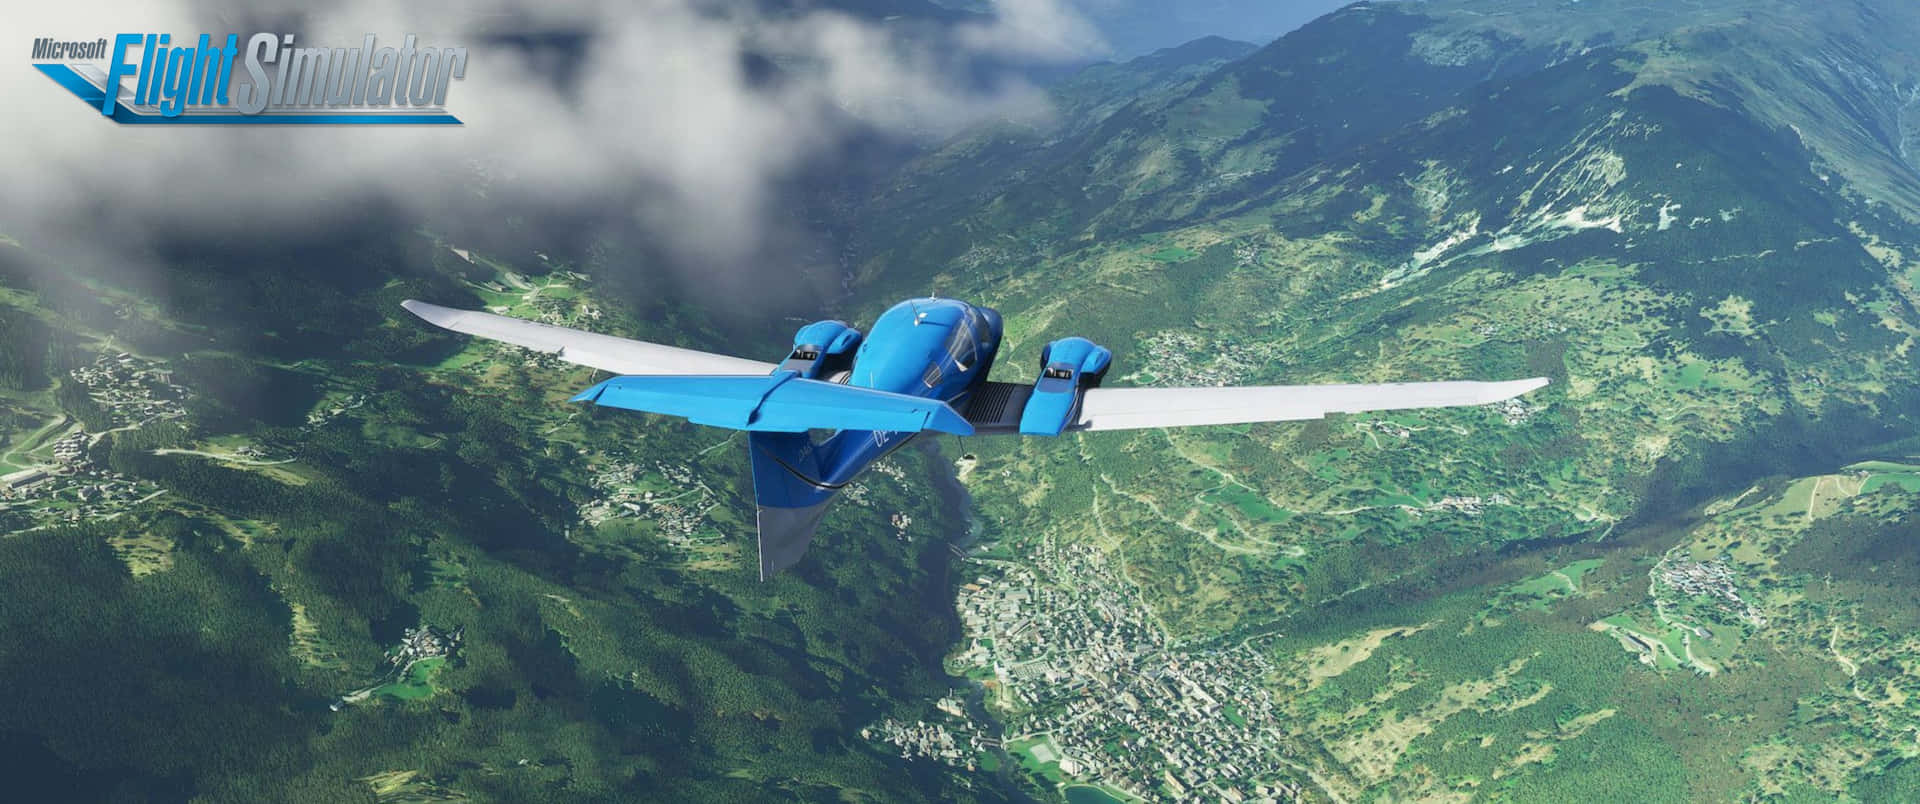 3440x1440p Microsoft Flight Simulator Background Wallpaper